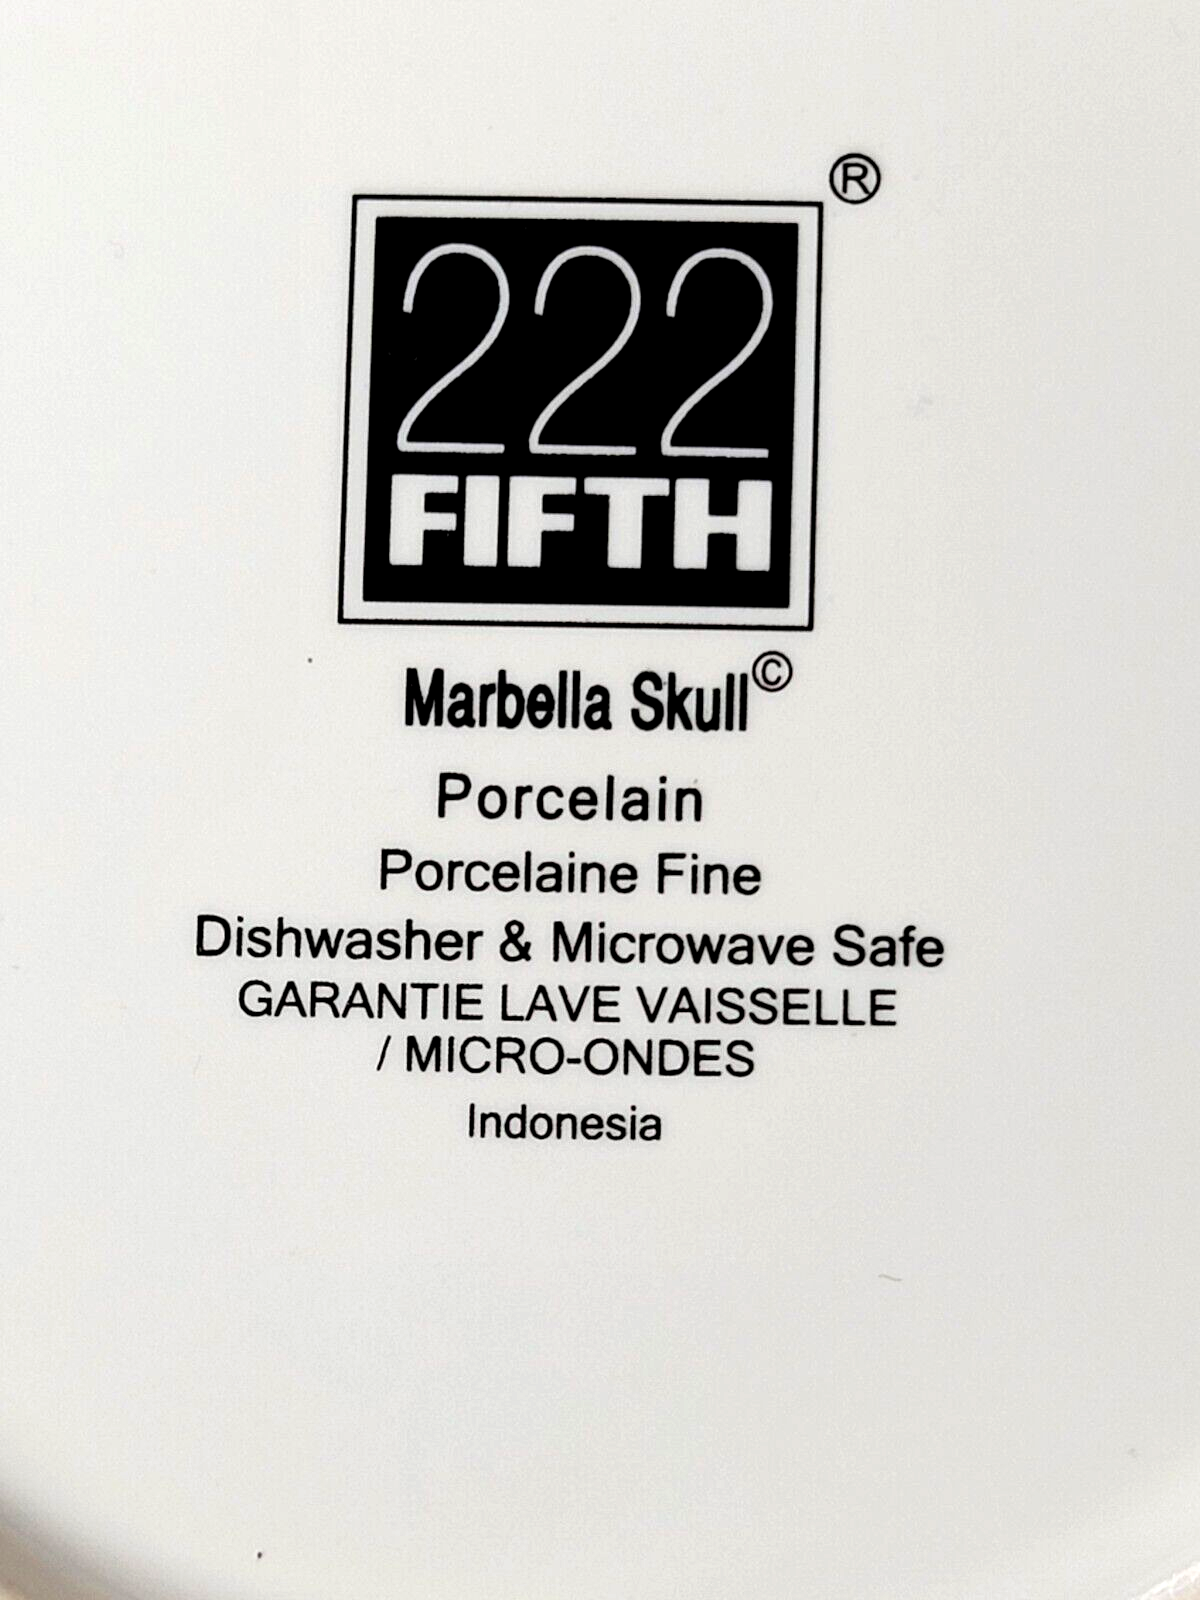 RARE 17 Pc. 222 Fifth "Marbella" B &W Sugar Skulls Porcelain Dinnerware Set New!